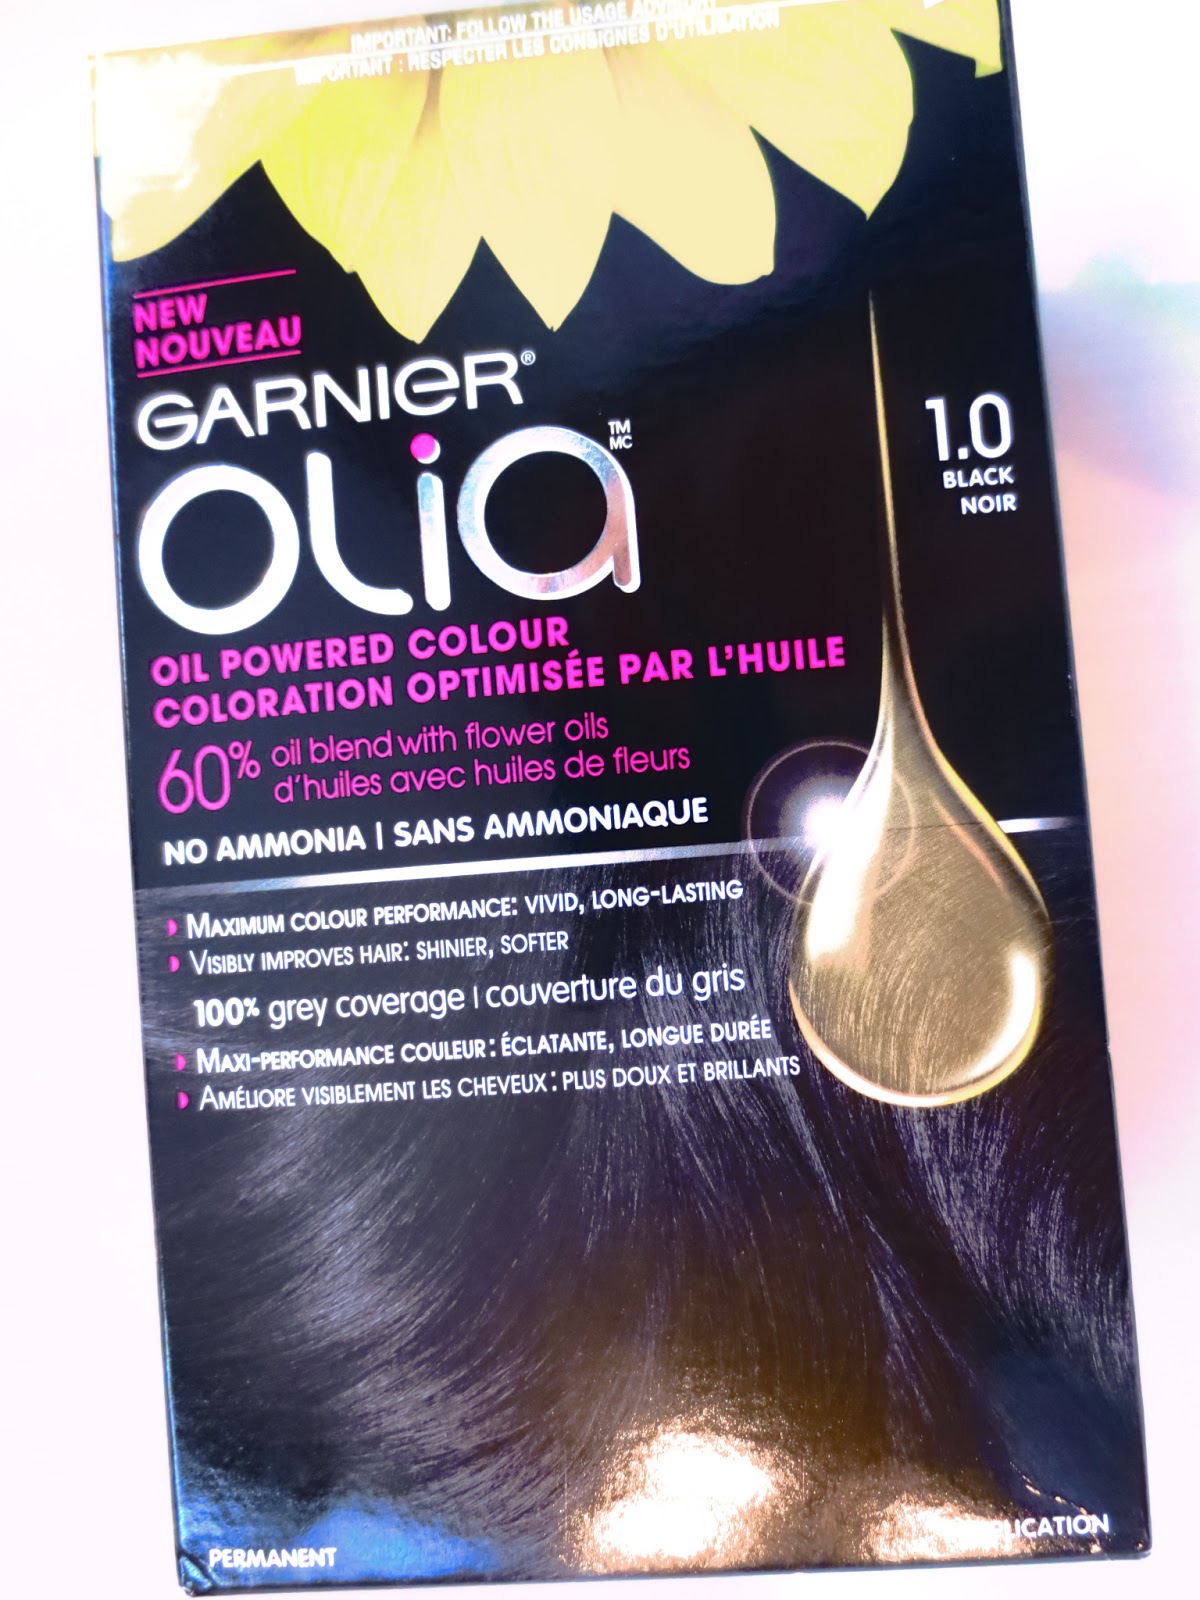 Garnier Olia Hair Color Review - My Blog Spot